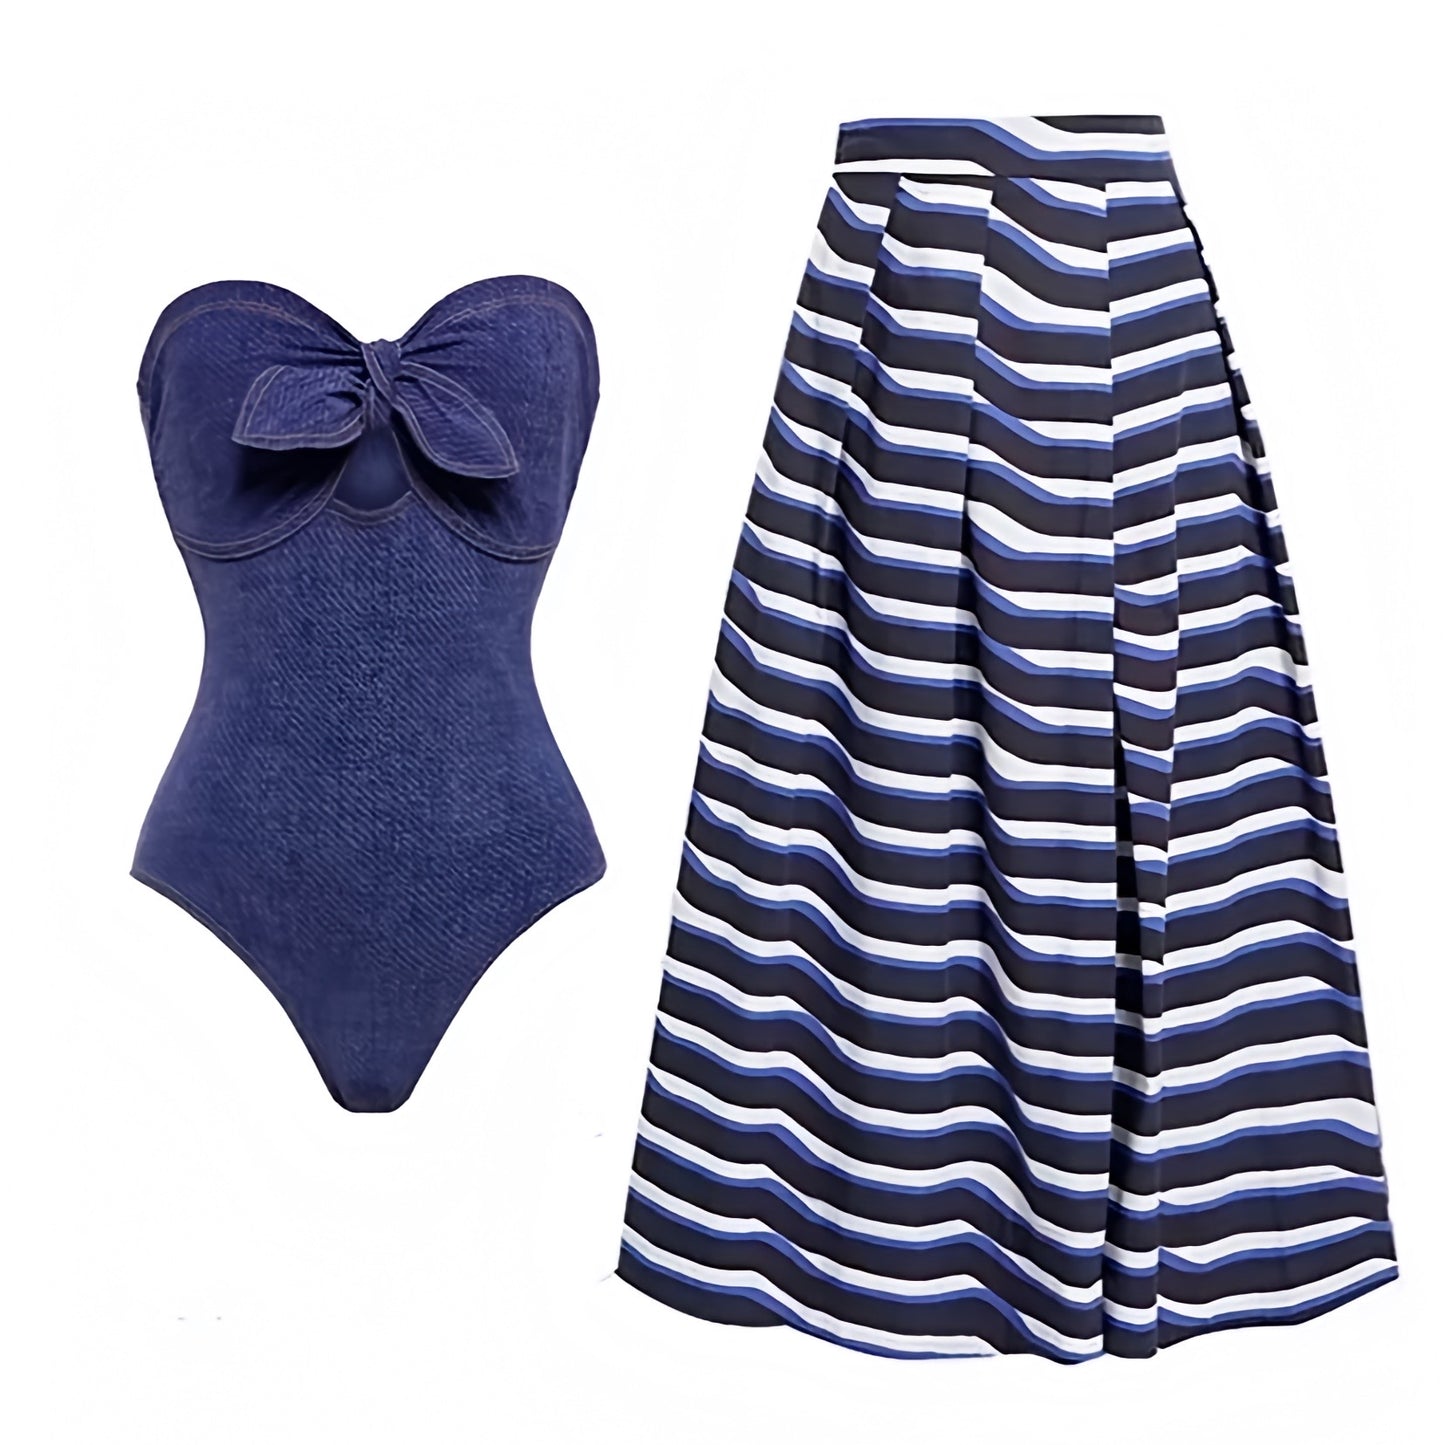 navy-blue-knit-textured-slim-fit-bodycon-cut-out-knot-tie-sweetheart-neckline-bandeau-strapless-sleeveless-underwire-push-up-cheeky-thong-modest-one-piece-swimsuit-swimwear-bathing-suit-with-midi-long-maxi-striped-seersucker-cover-skirt-set-women-ladies-teens-tweens-chic-trendy-spring-2024-summer-elegant-classic-classy-feminine-preppy-style-european-greece-vacation-coastal-granddaughter-grandmillennial-mamma-mia-beach-wear-revolve-frankies-bikinis-blackbough-grey-bandit-dupe